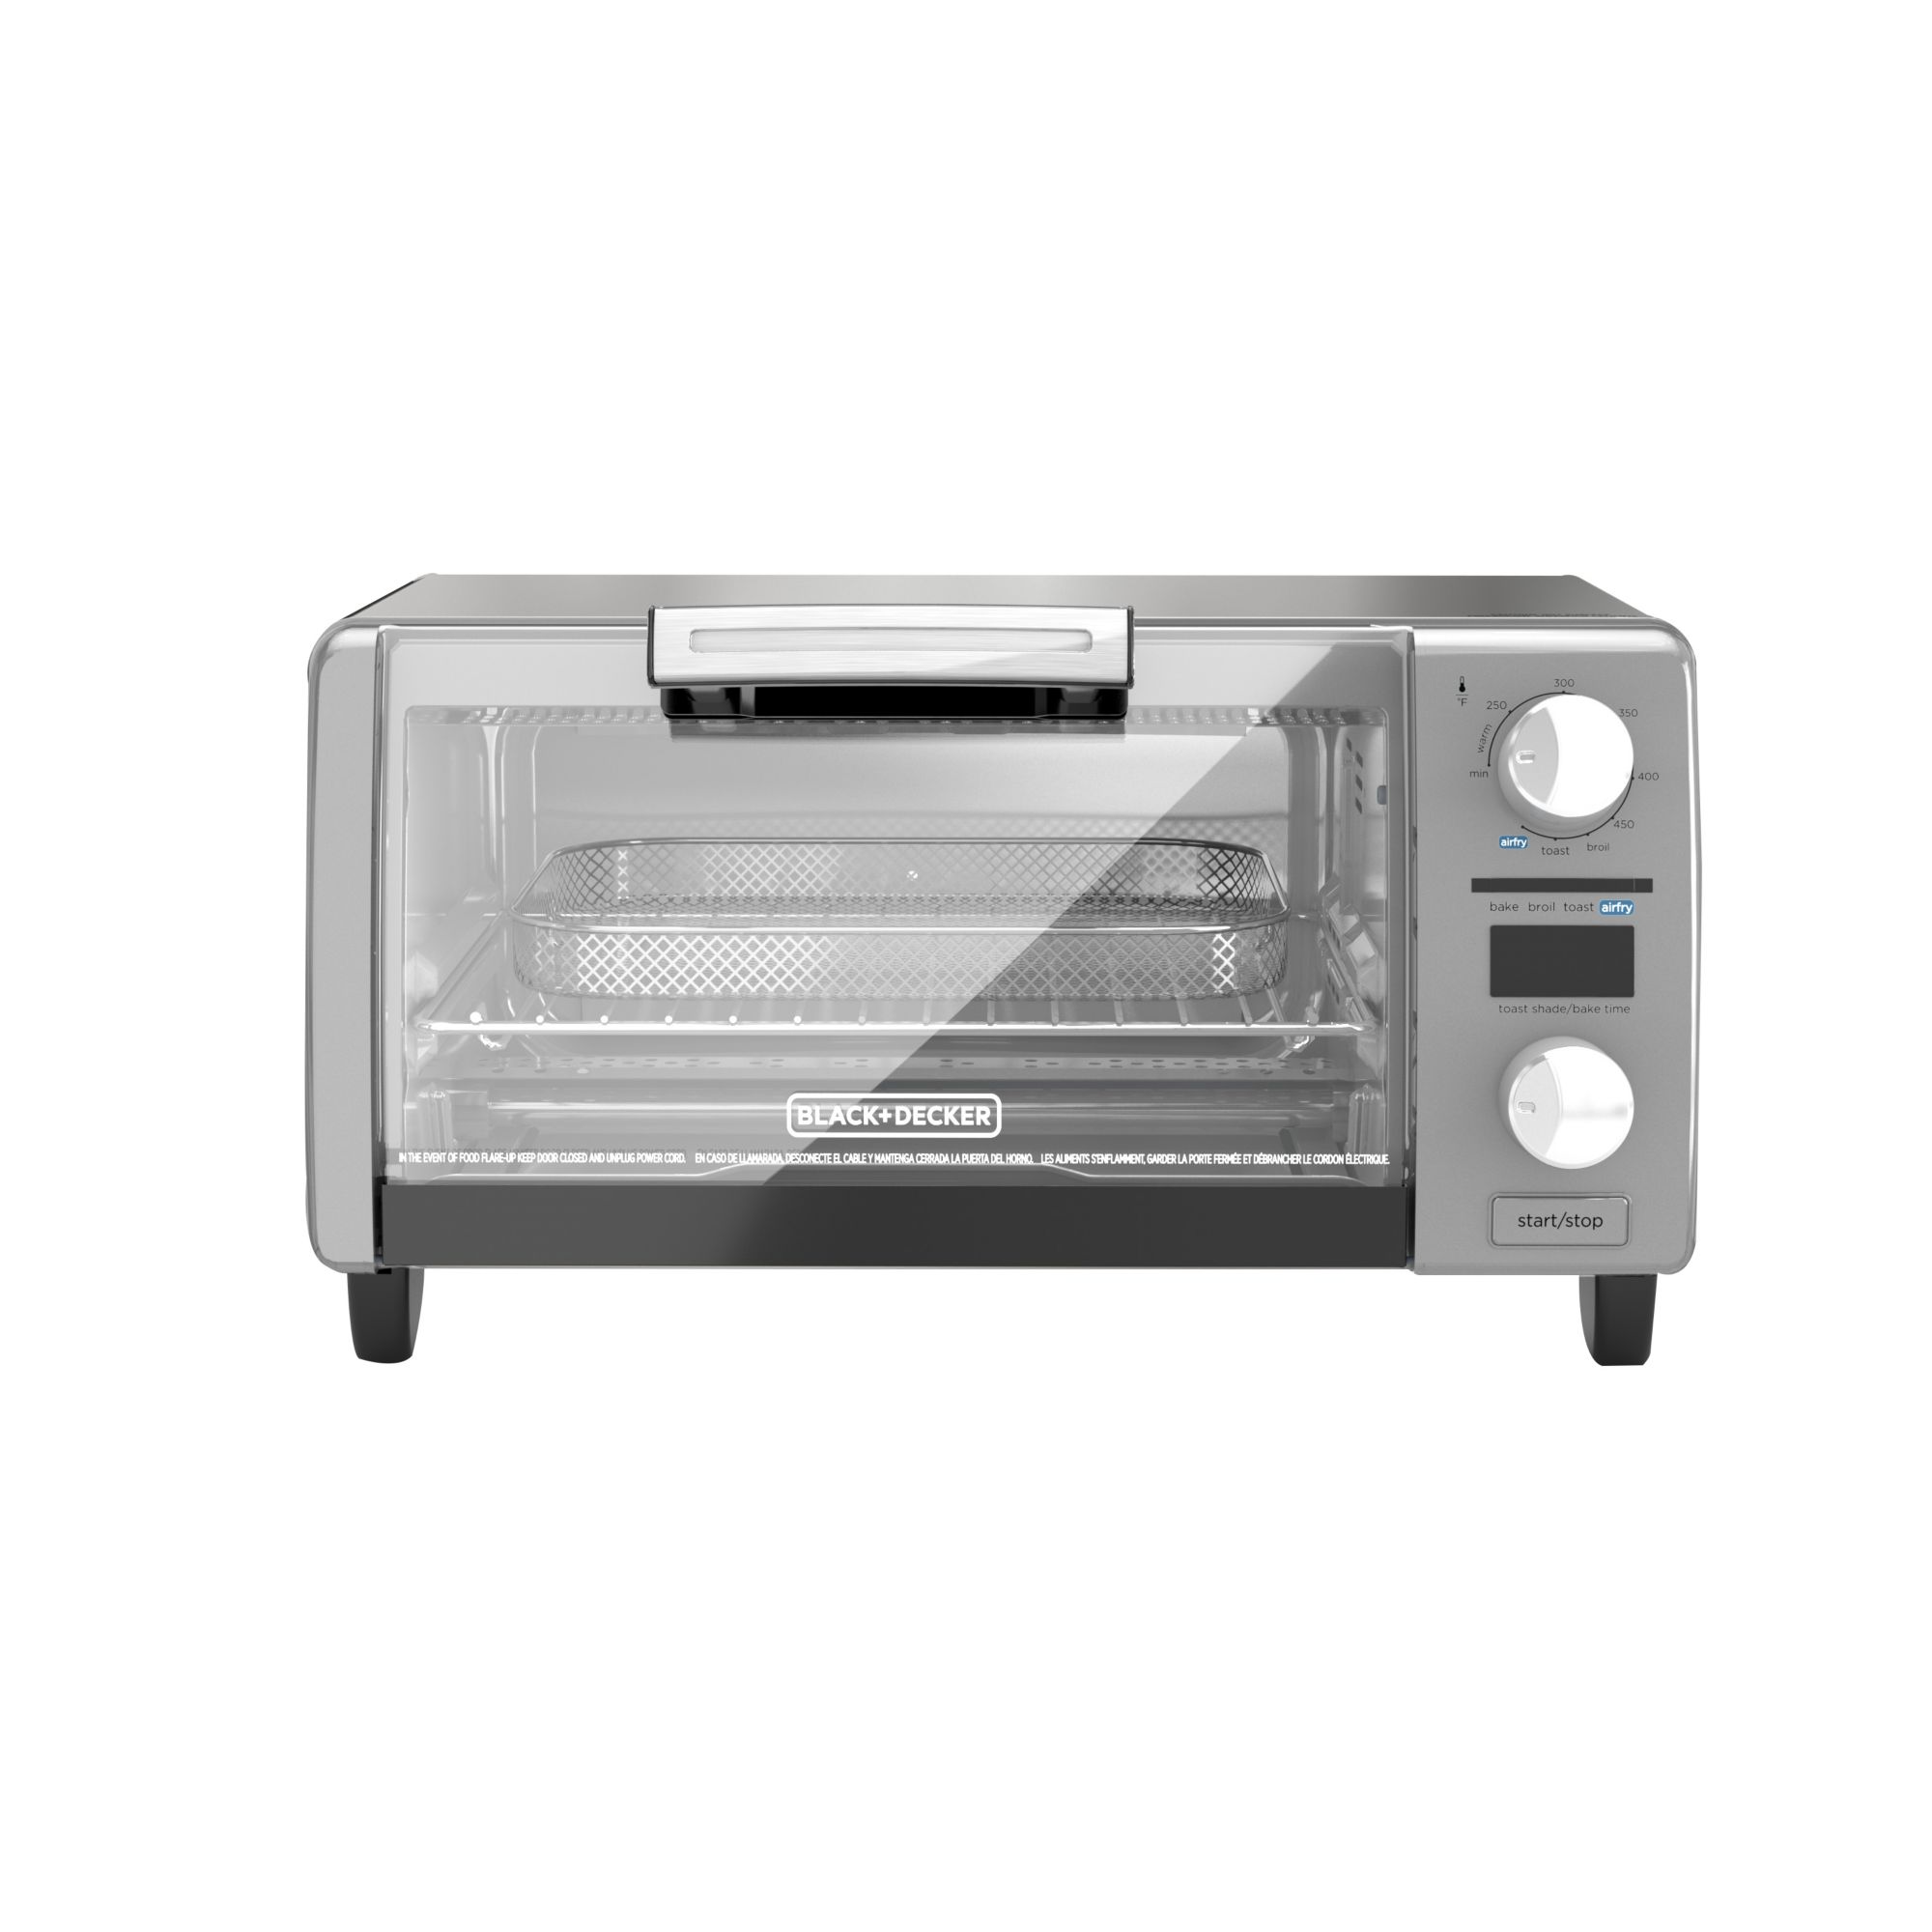 Digital Advantage Toaster Oven, CTO4500S